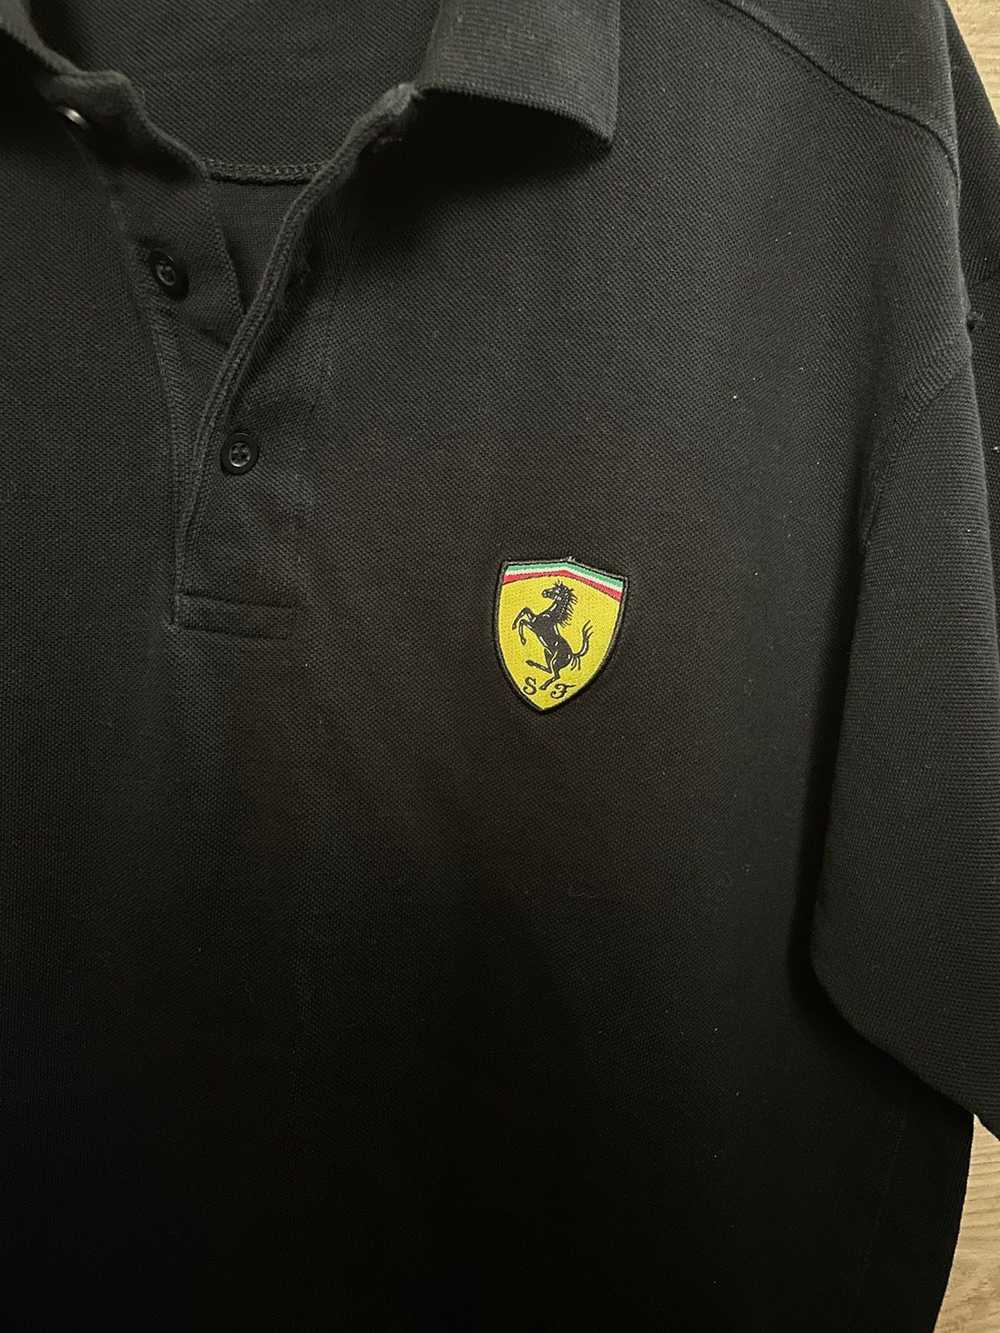 Ferrari Ferrari Polo - image 3